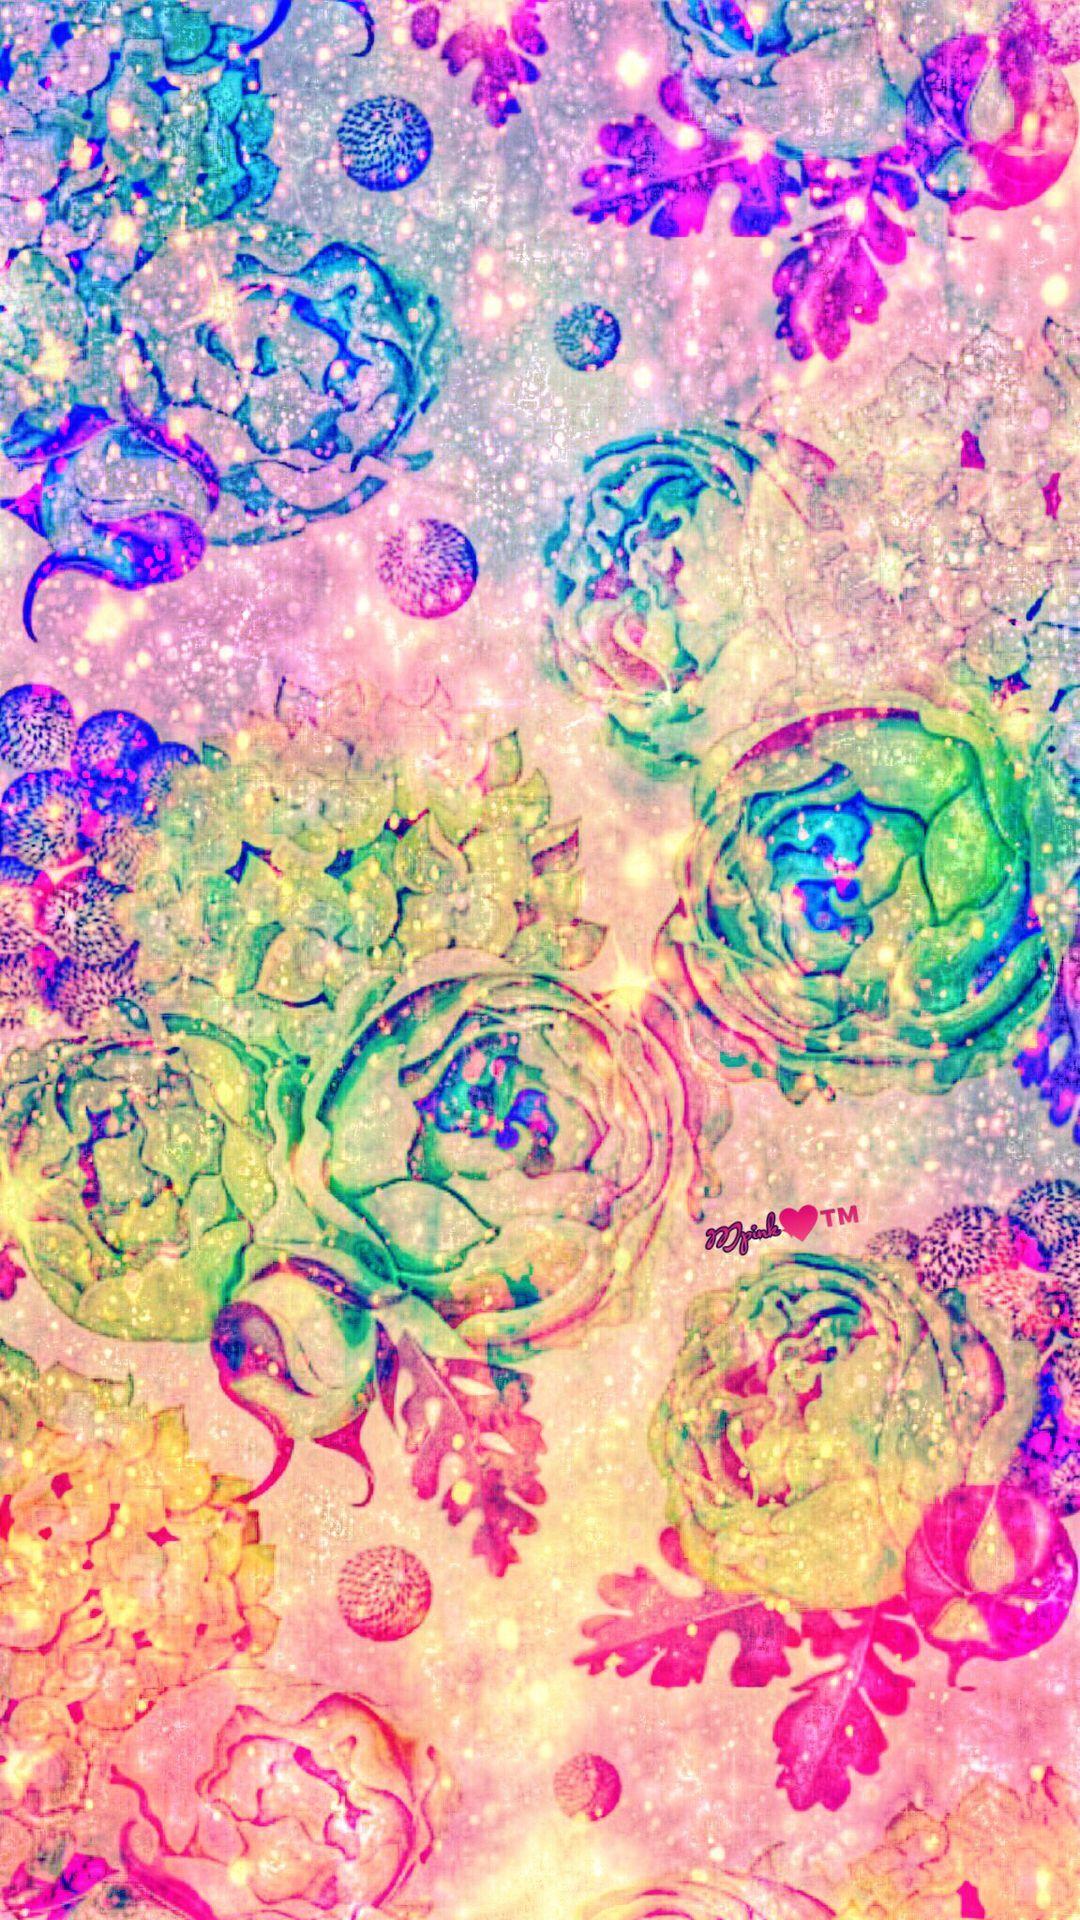 Rainbow Floral Galaxy Wallpaper #androidwallpaper #iphonewallpaper # wallpaper #galaxy #sparkle. iPhone wallpaper pattern, Galaxy wallpaper iphone, Galaxy flowers